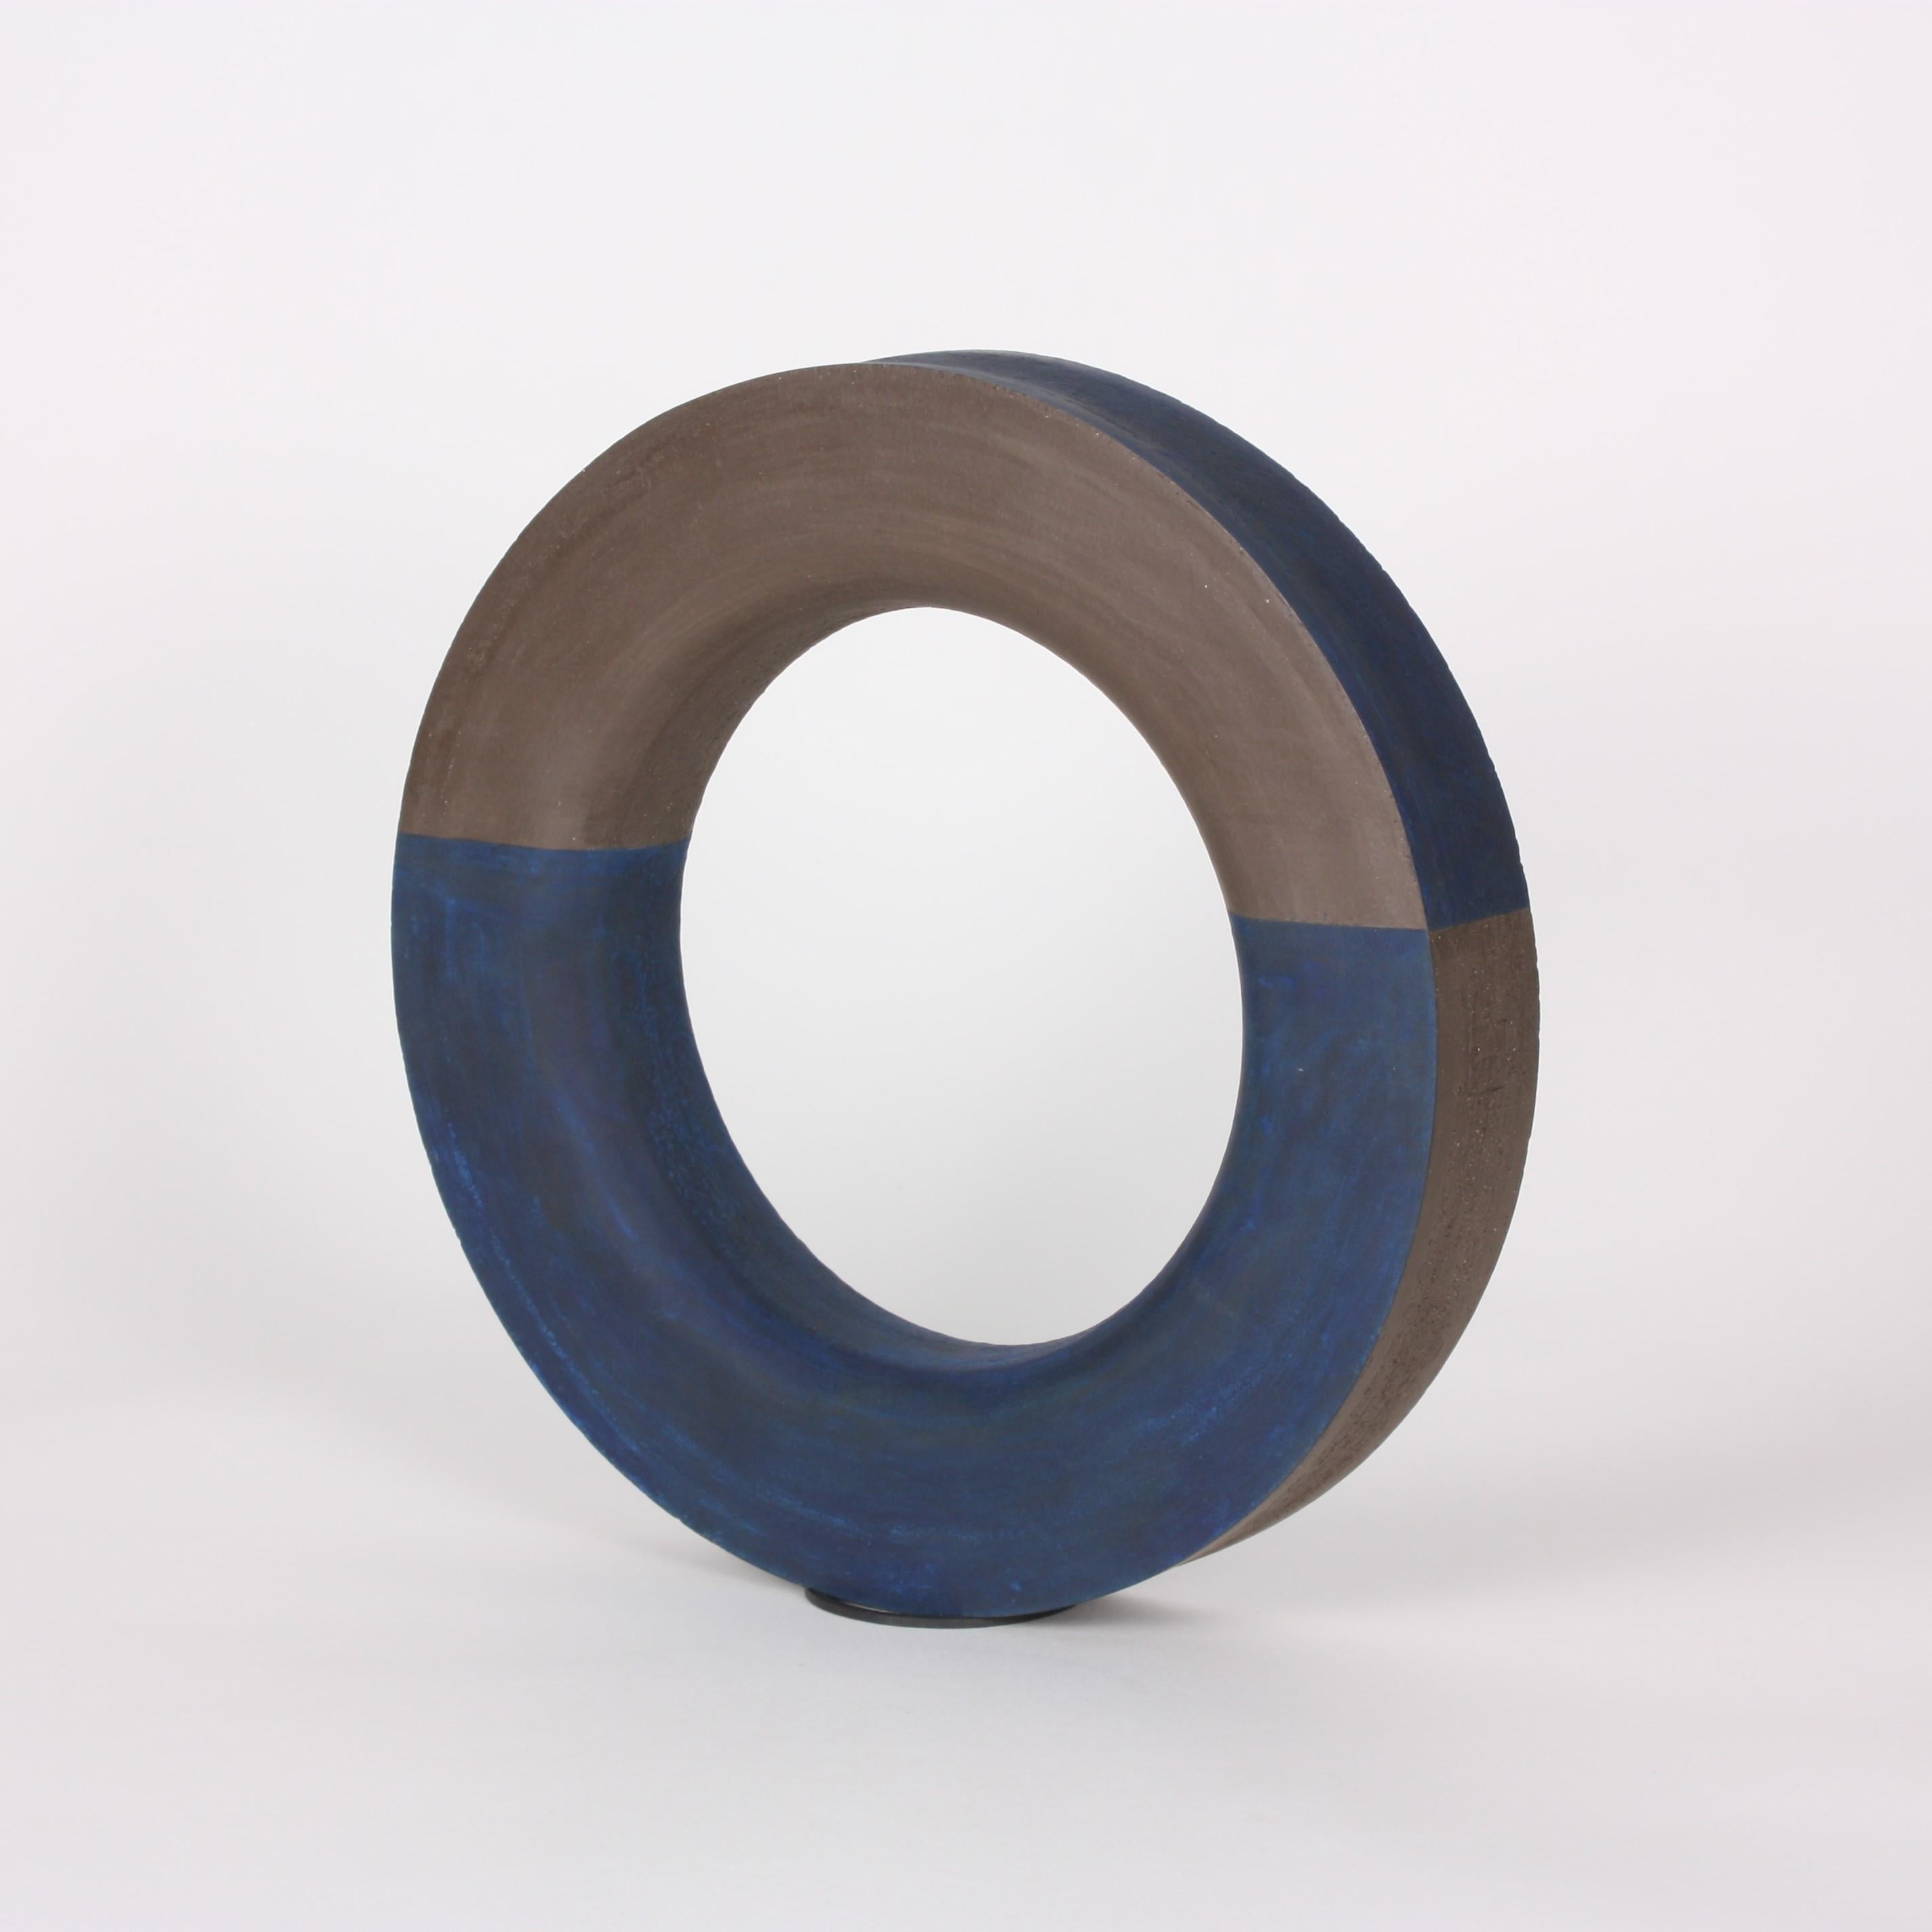 Minimalist Contemporary Ceramic Sculpture, Anneau Arc Bleu